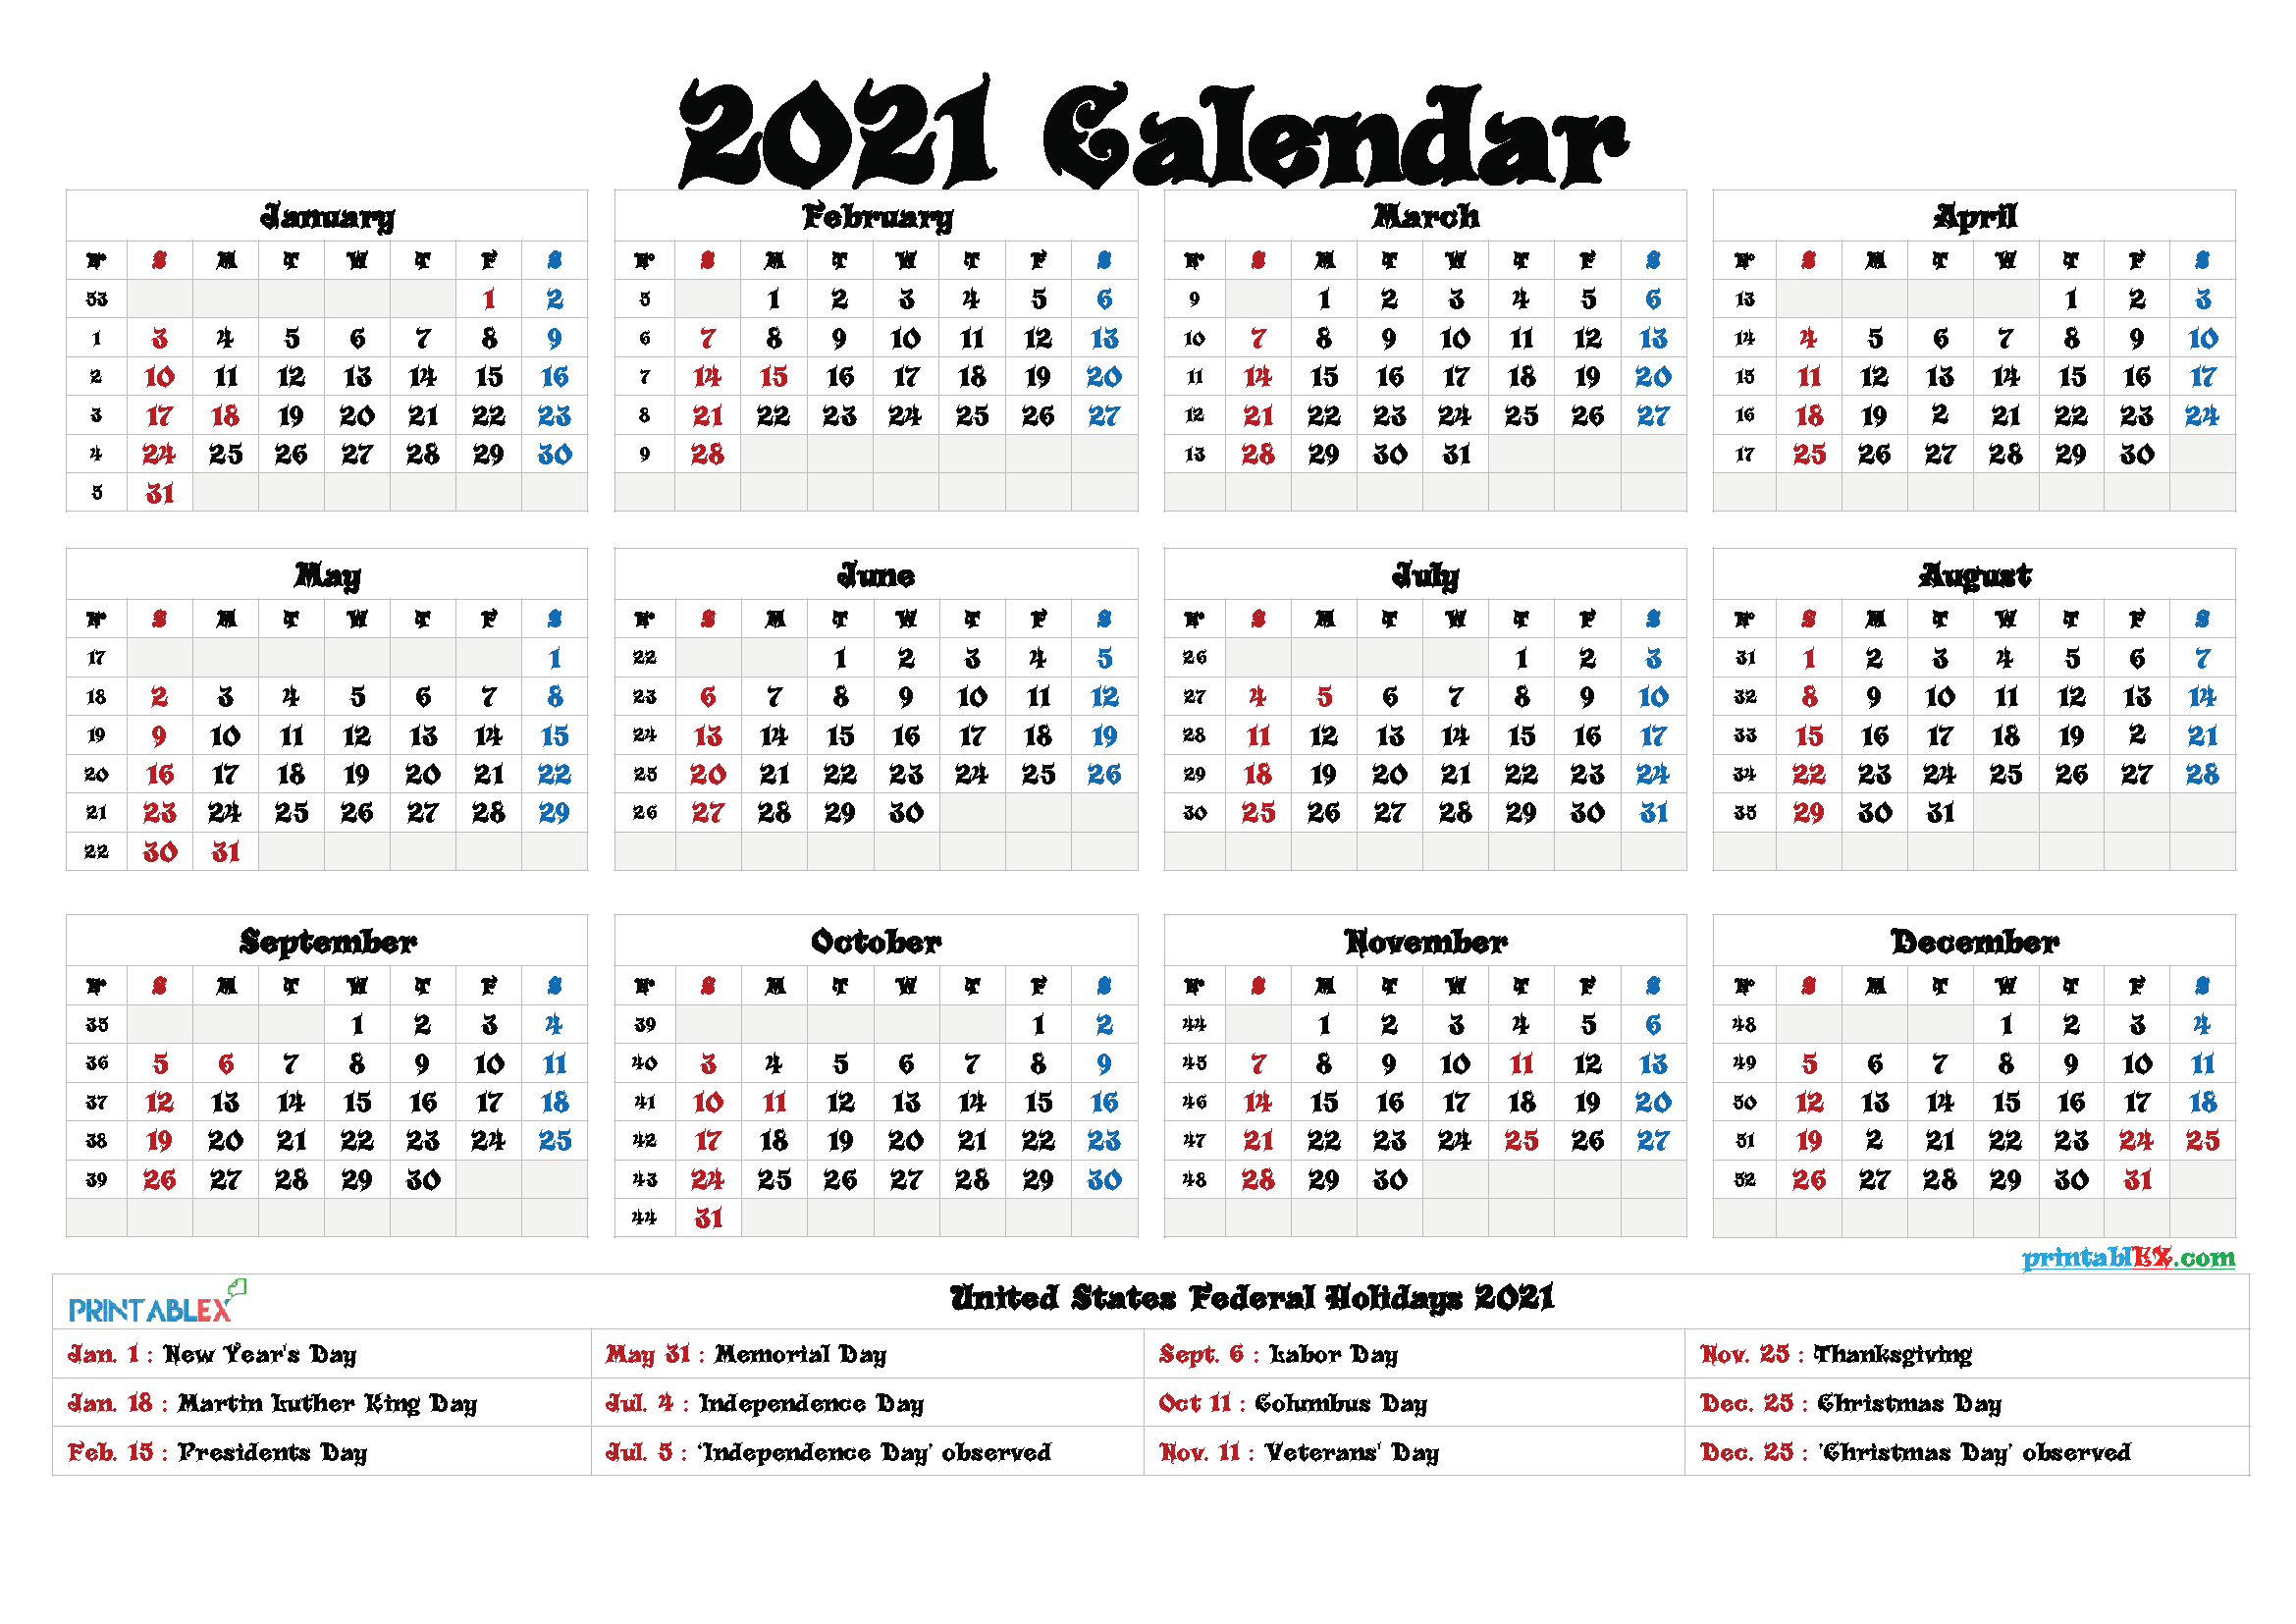 Calendar 2021 With Holidays Printable - February 2021